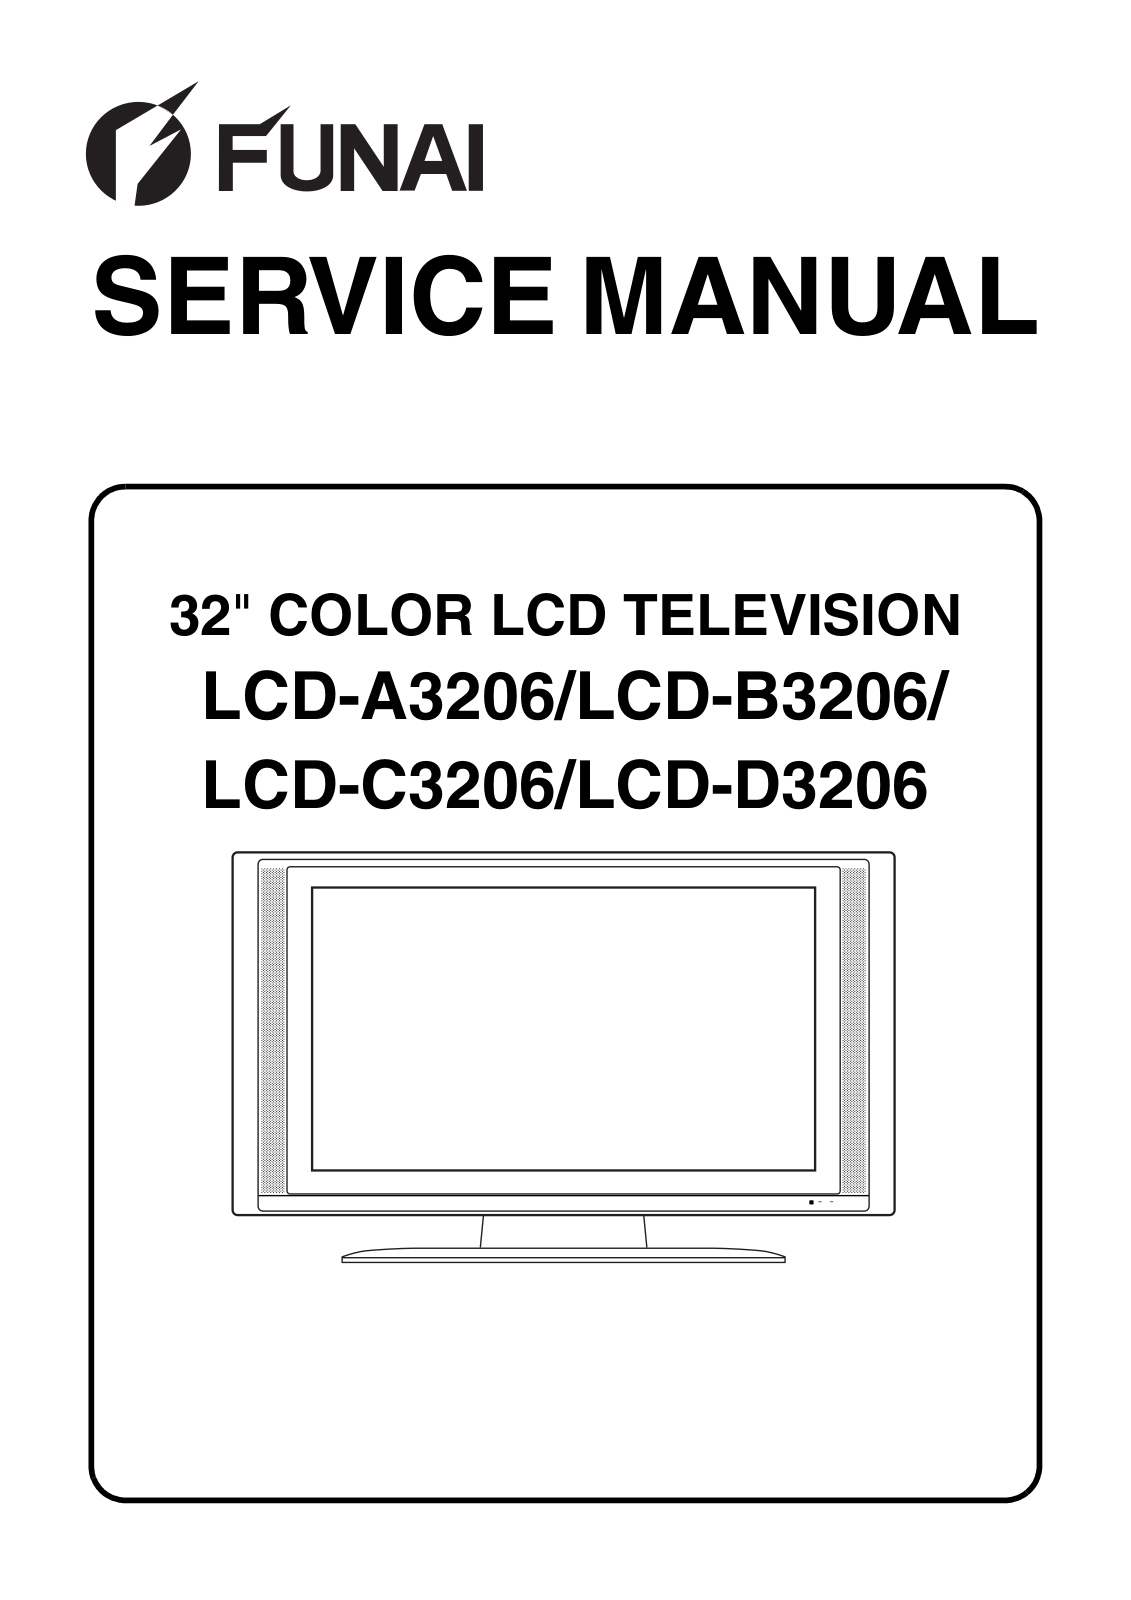 Funai LCD-D3206, LCD-C3206, LCD-B3206, LCD-A3206 Service Manual